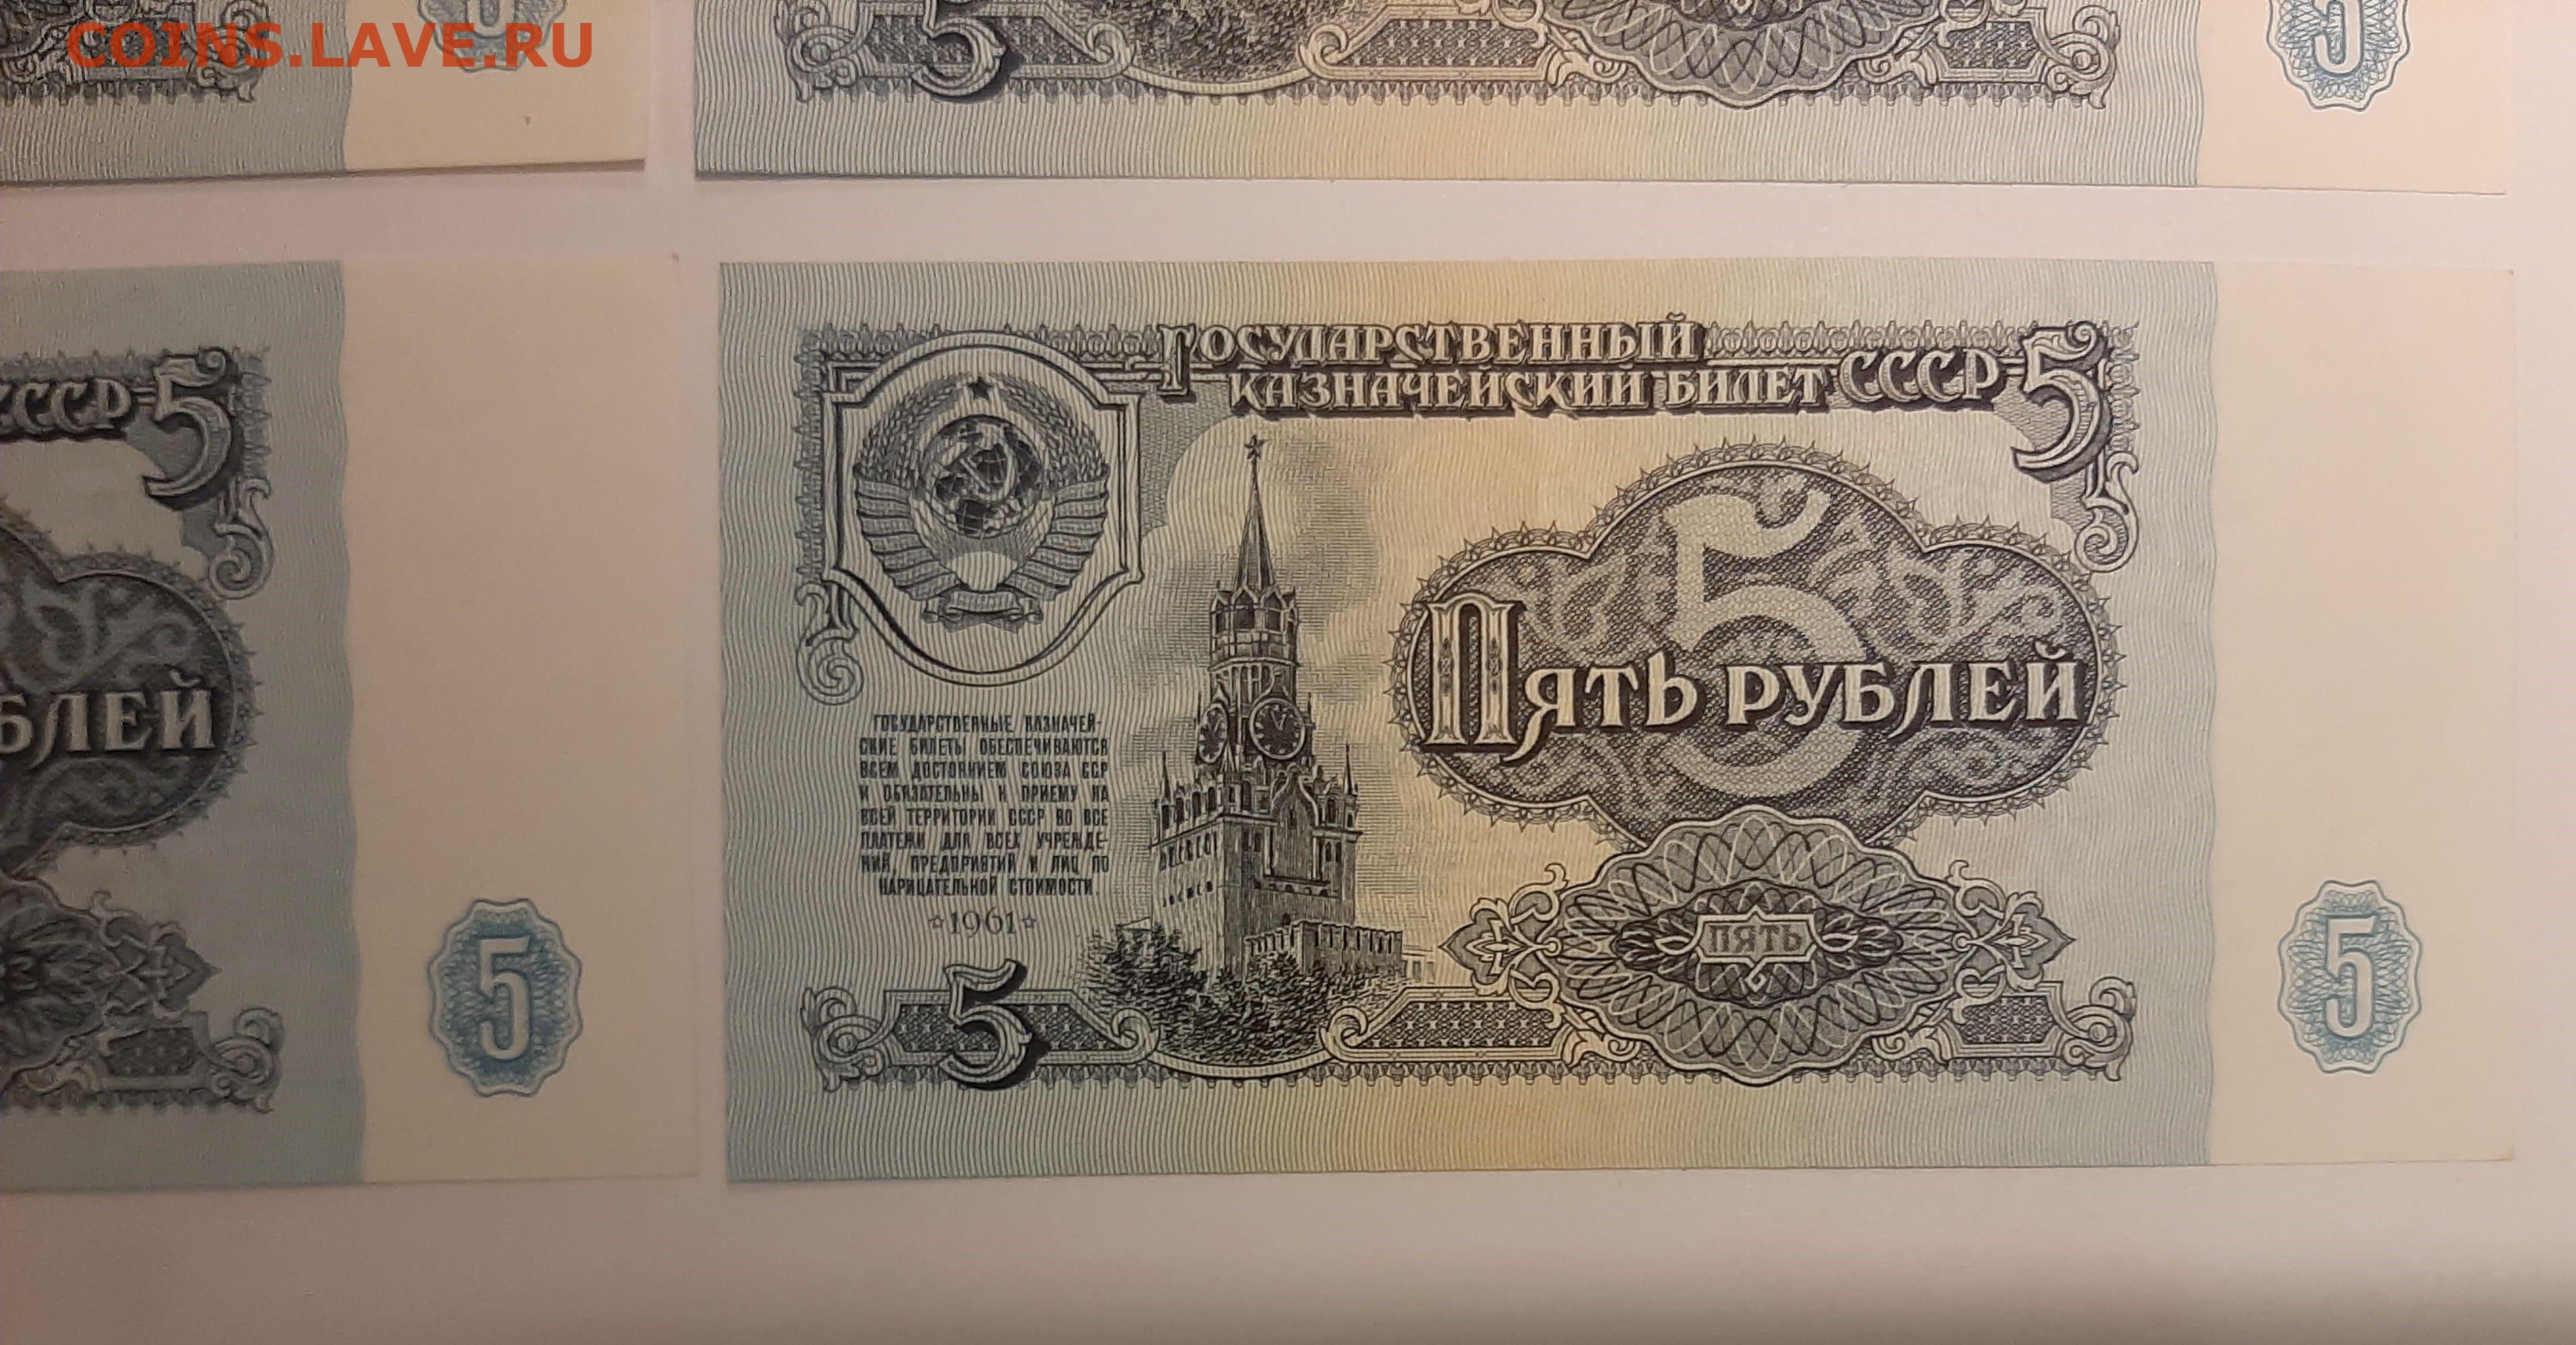 20 рублей 1961. 200 Рублей 1961. 5 Рублей 1961. 200 Рублей 1961 года. 200 Рублей 1961 зеленая.